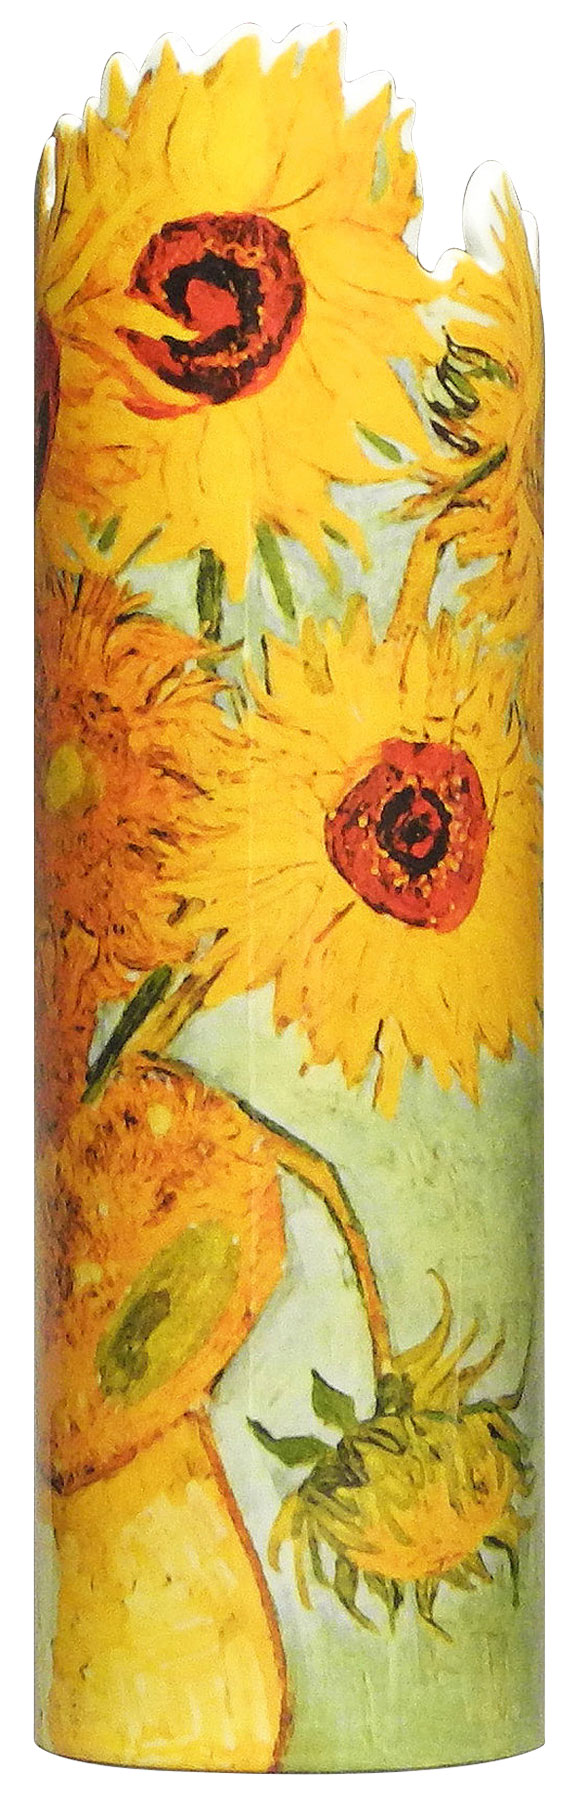 Ceramic vase "Sunflowers" (1888) by Vincent van Gogh